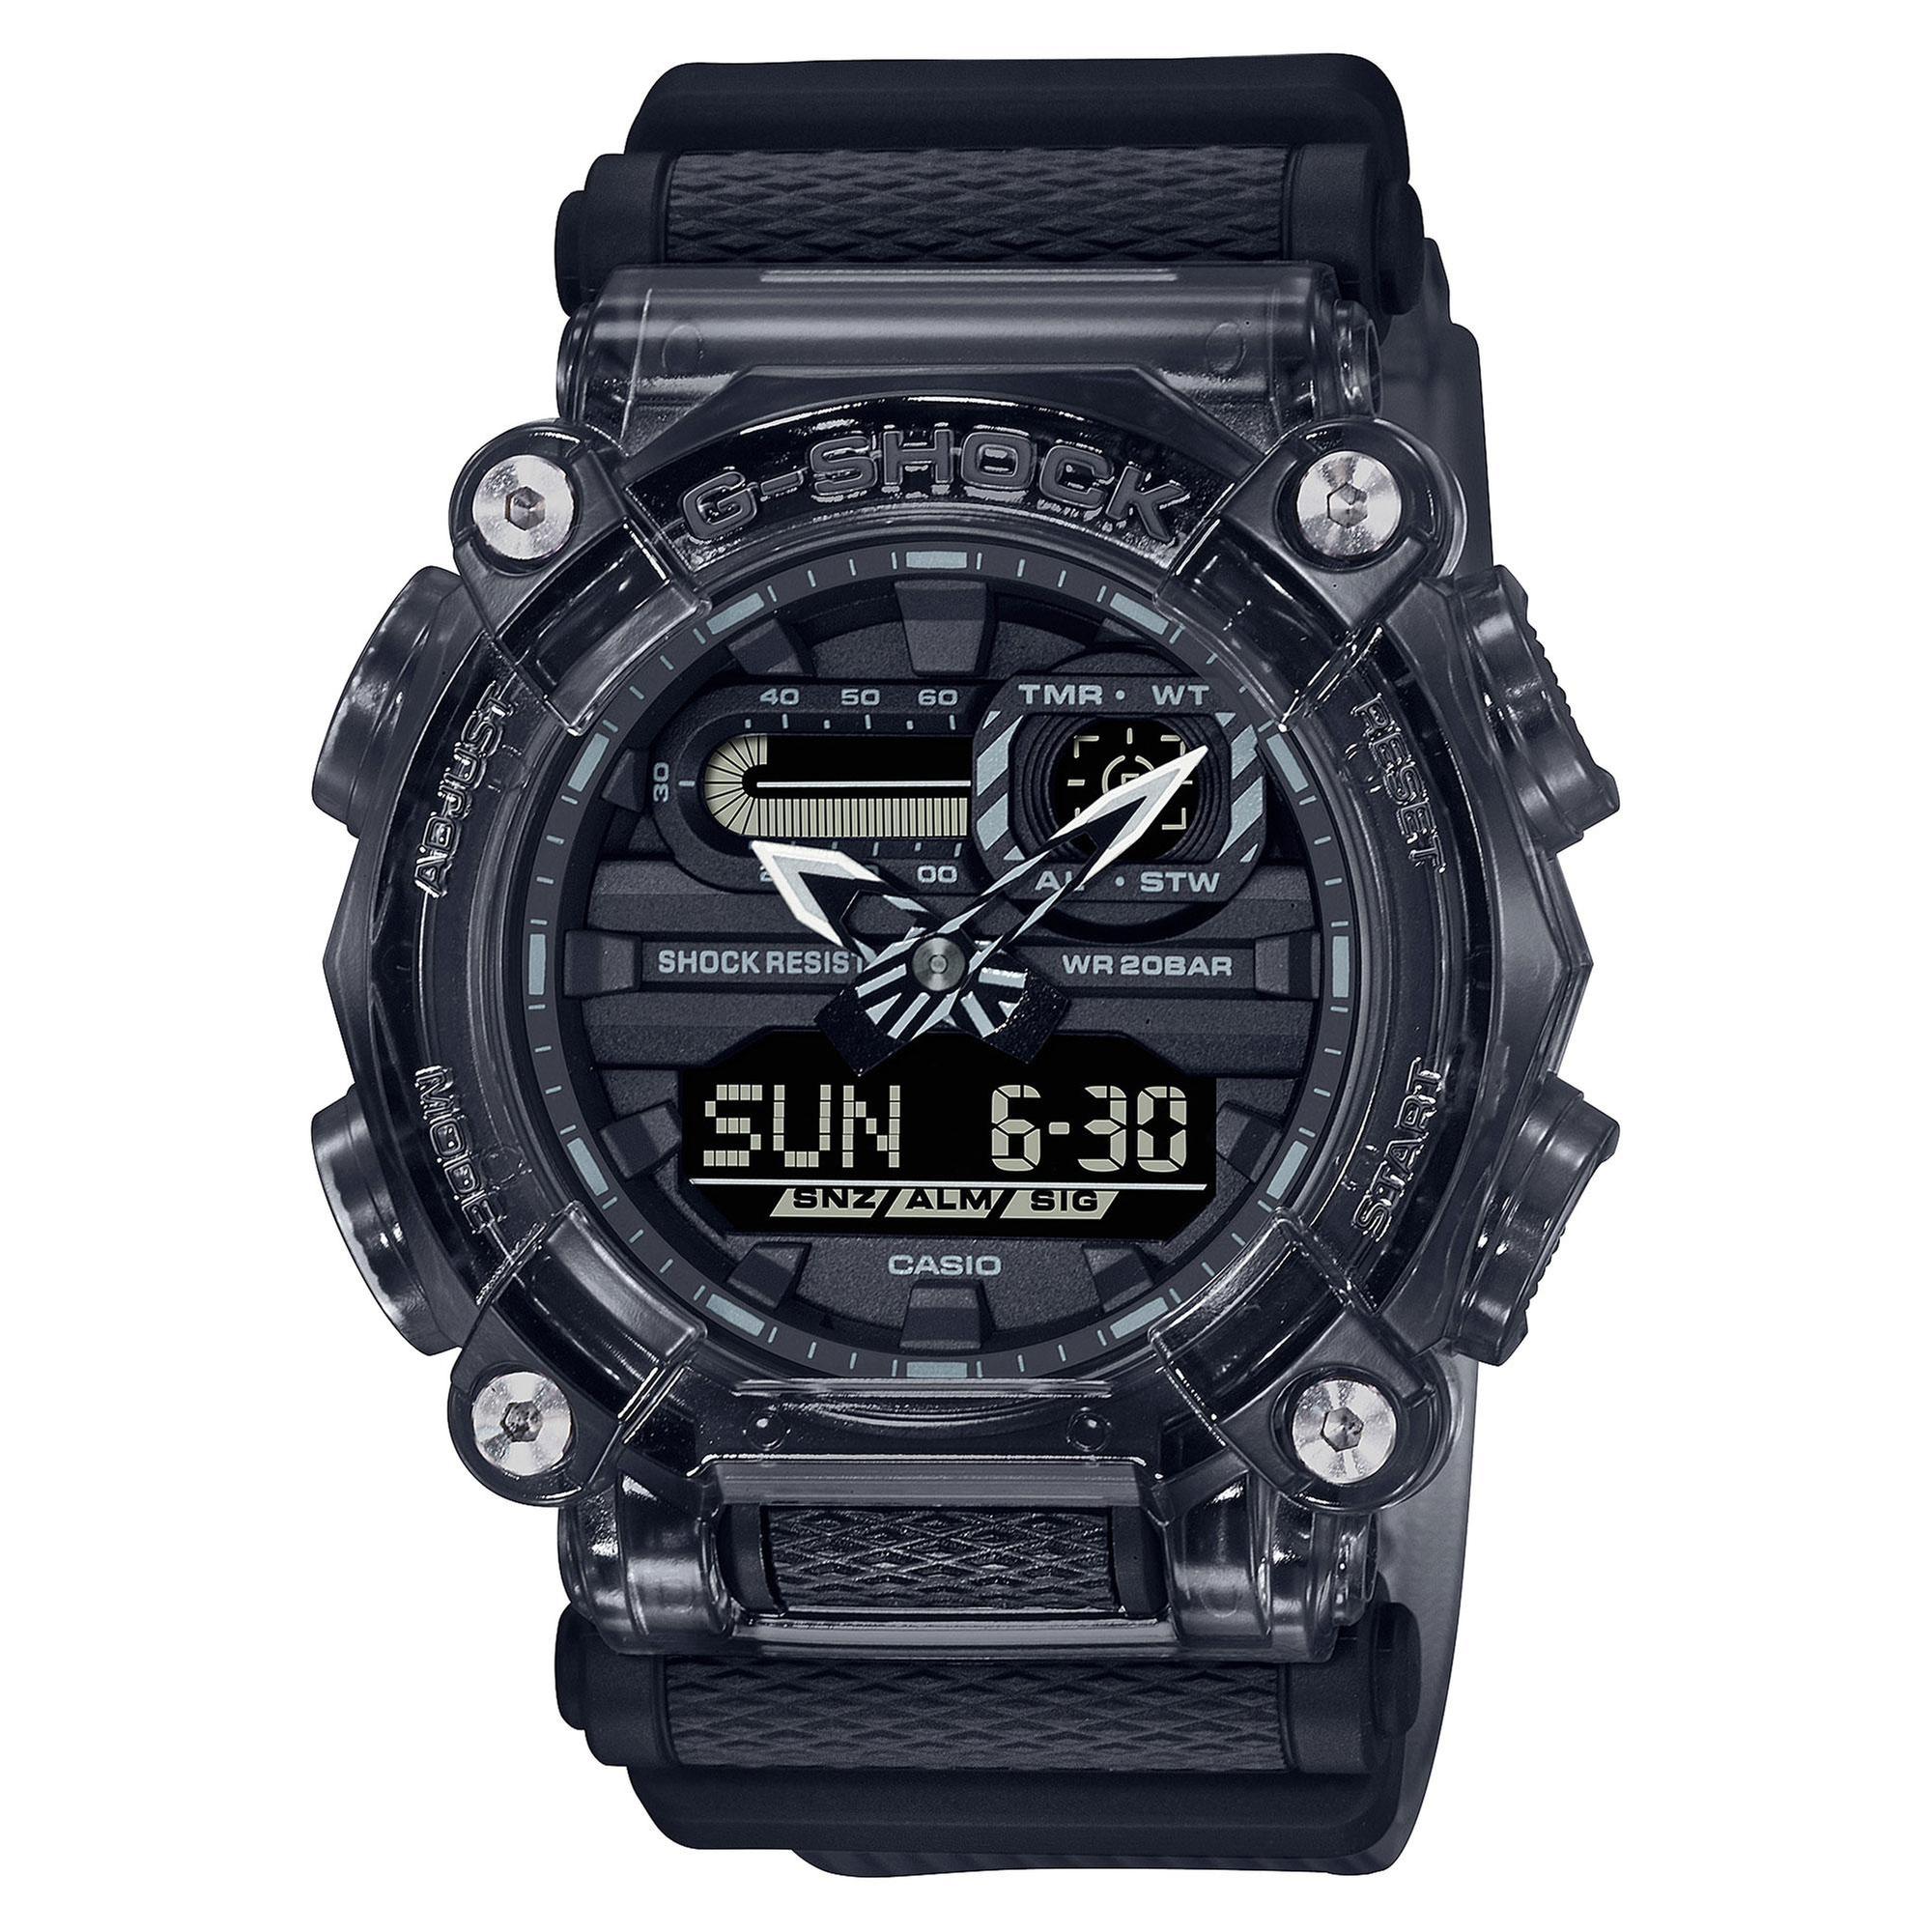 Afspraak Geboorte geven Oprechtheid Men's Casio G-Shock G-Squad Connected Black Watch GBA900-1A | REEDS Jewelers